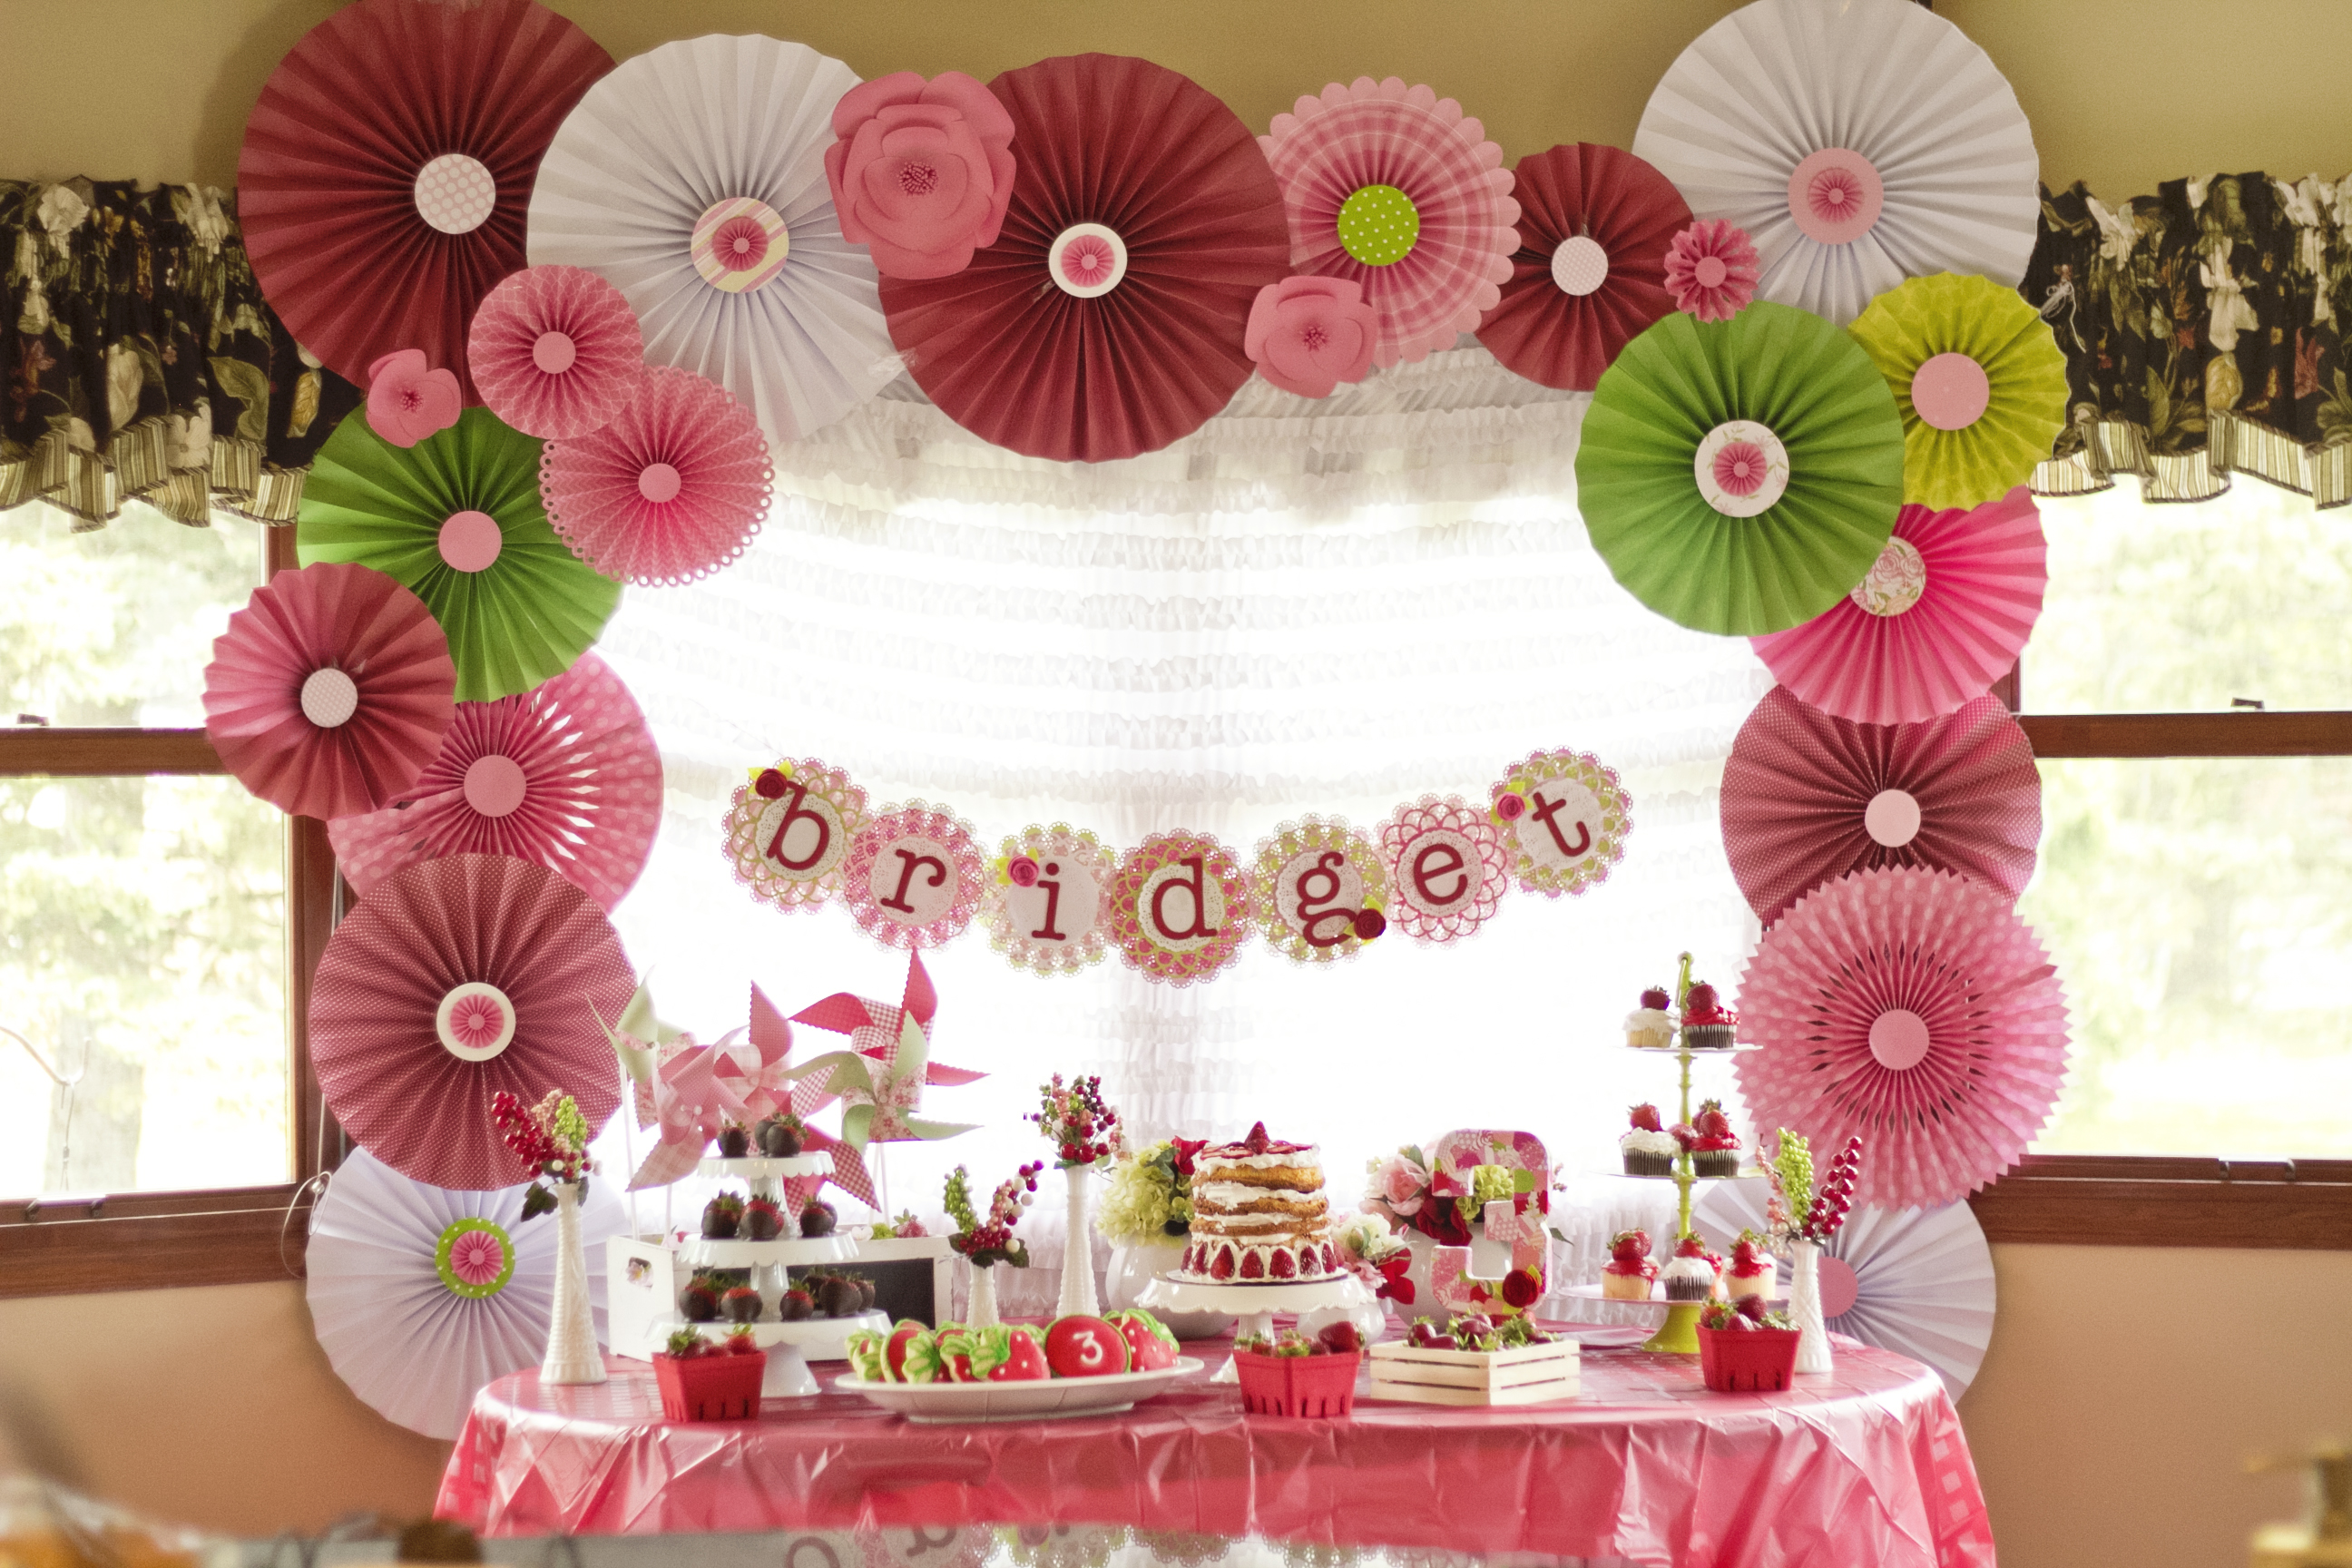 Strawberry Shortcake centerpieces  Strawberry party, Strawberry shortcake  party, 2nd birthday party for girl